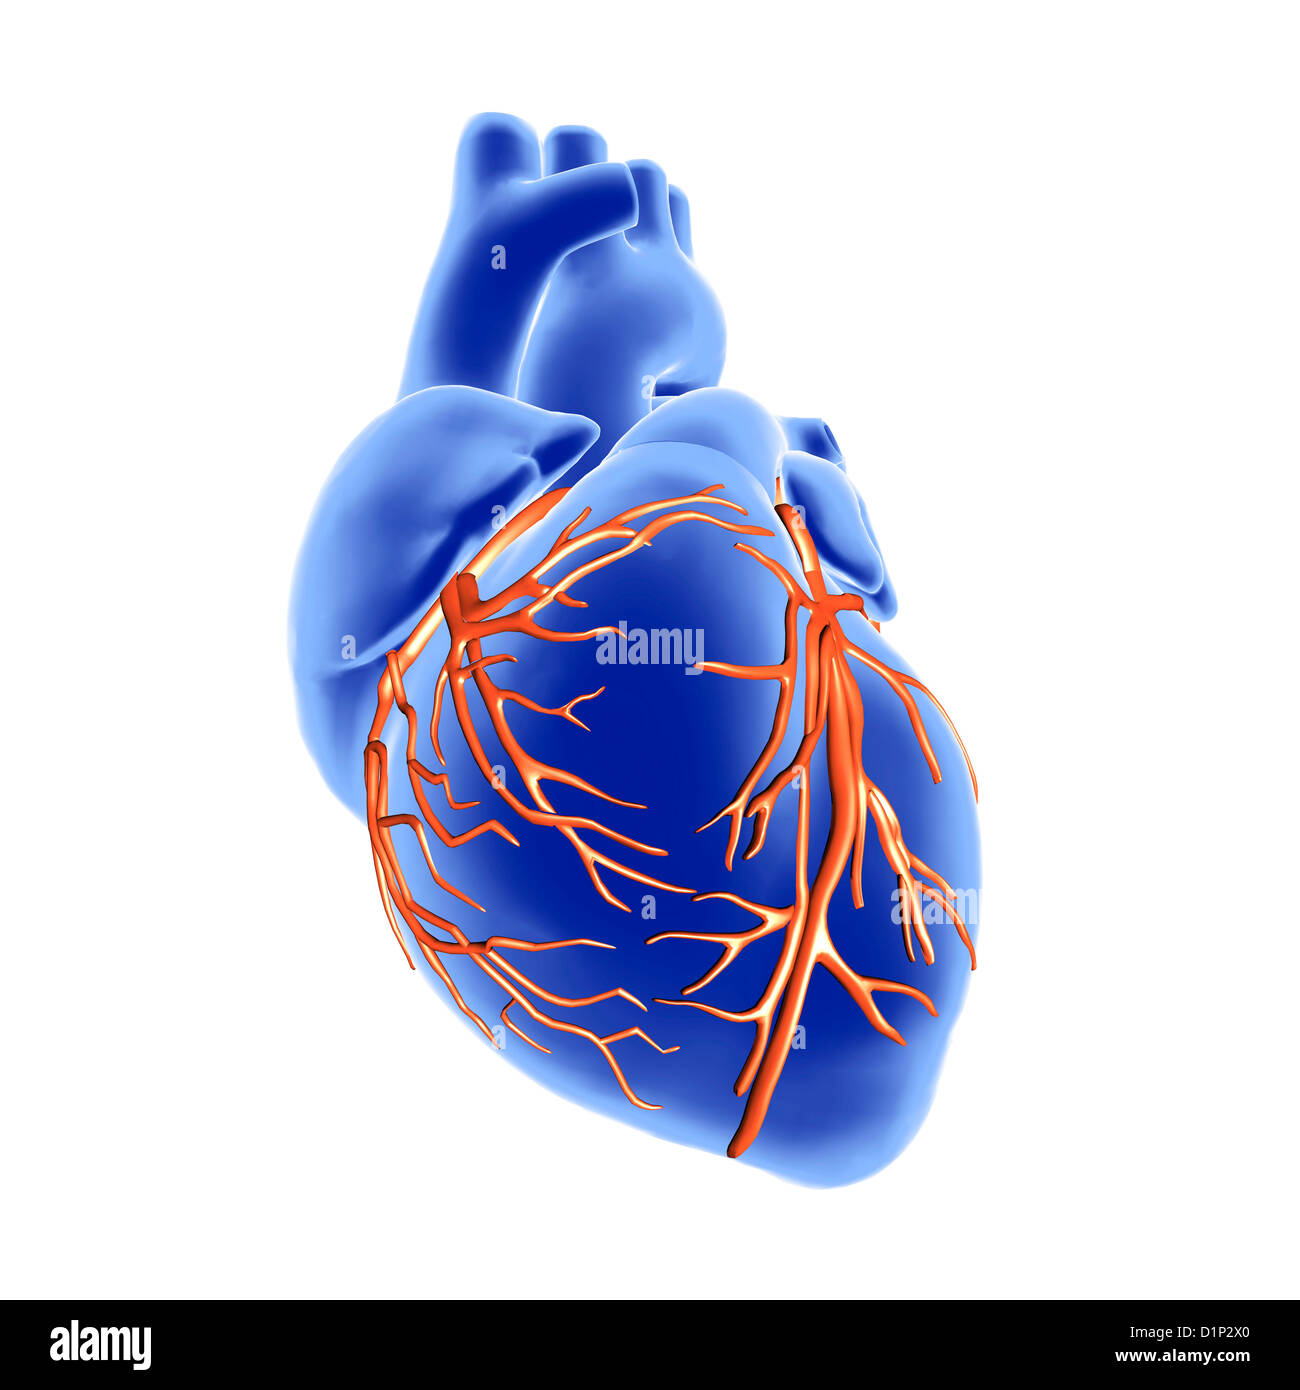 Heart and coronary arteries, artwork Stock Photo